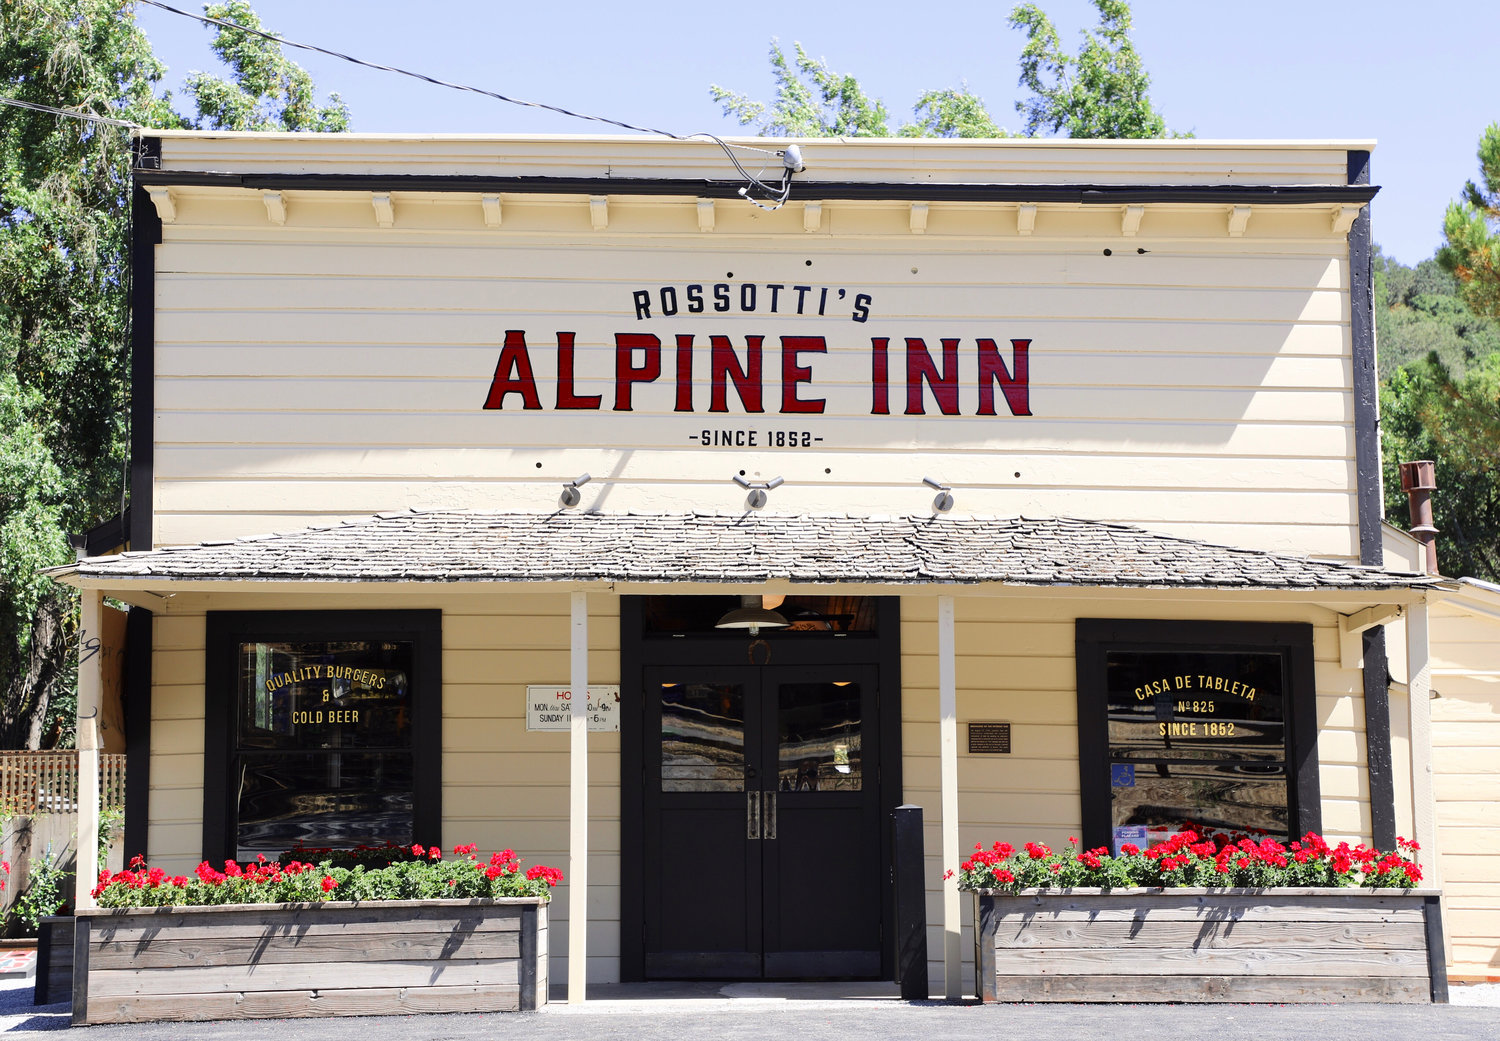 Rossotti's Alpine Inn